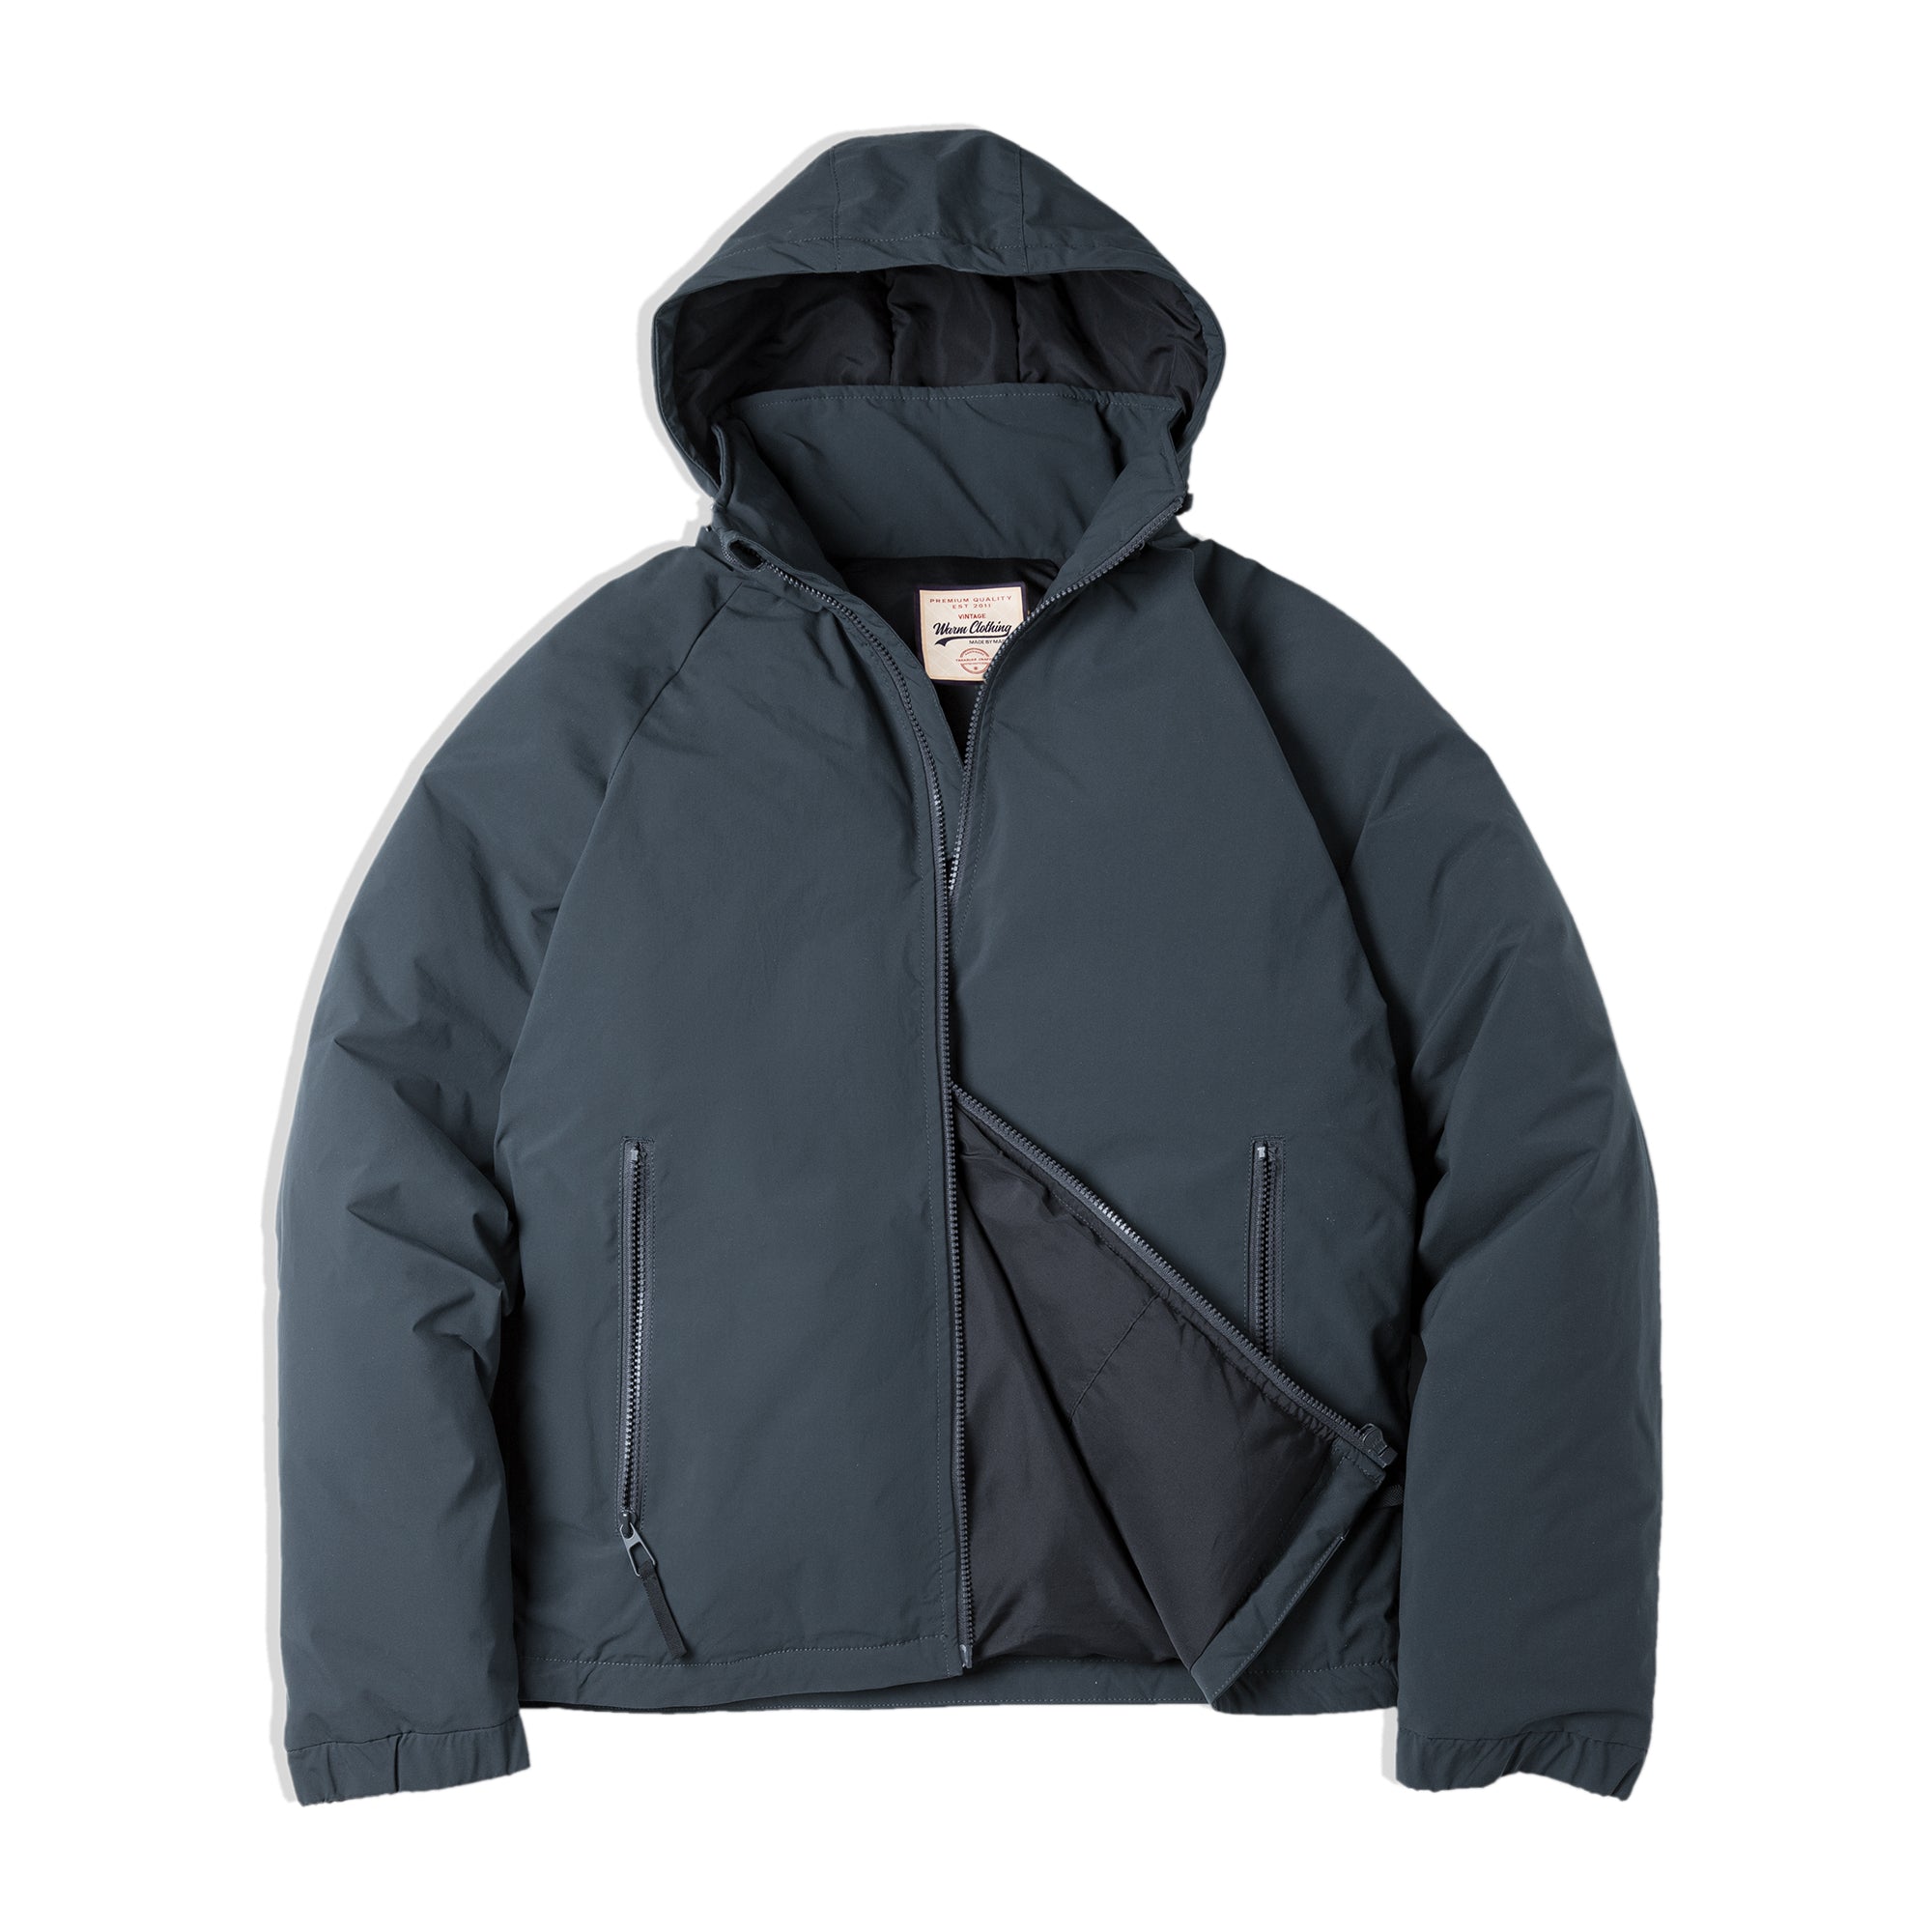 Japanese Retro Hooded Down Jacket - Warm Winter Coat